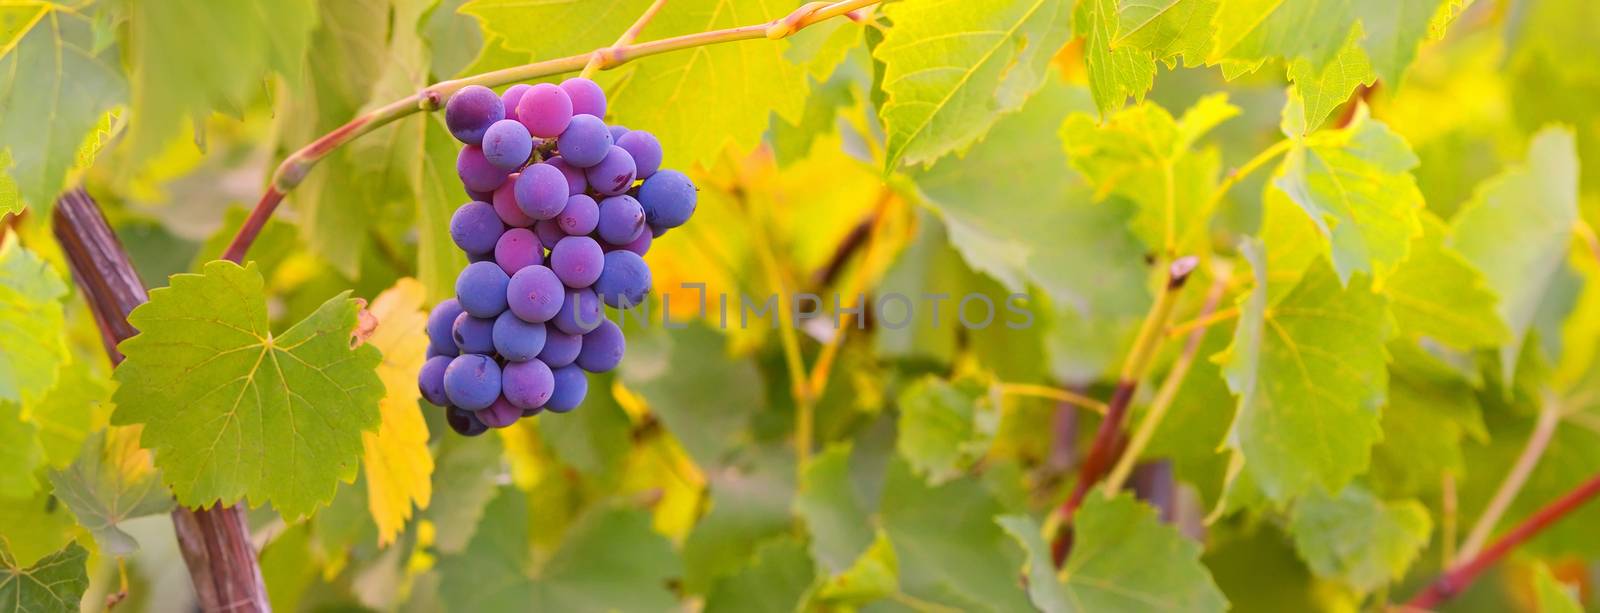 Ripe grapes  by jordachelr